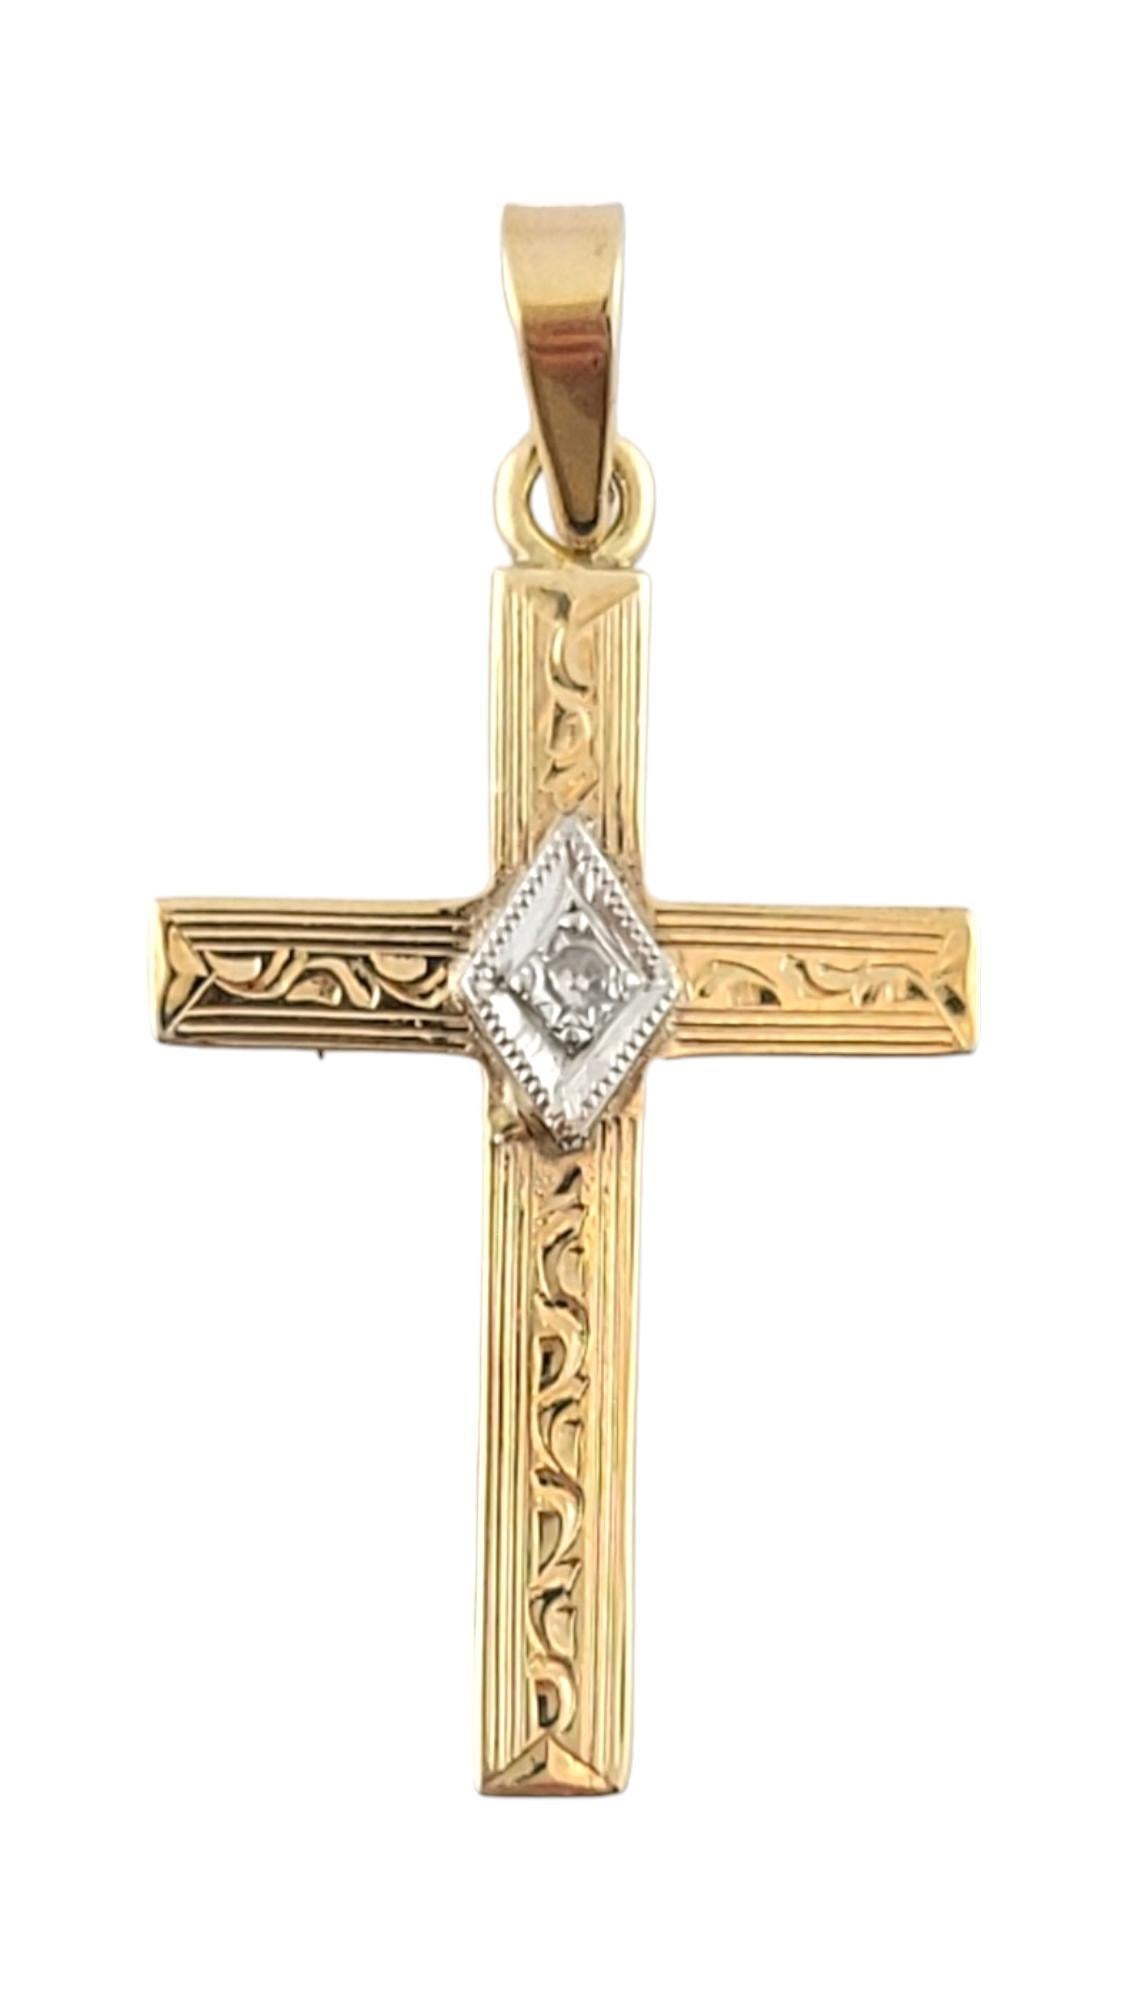 10K Yellow & White Gold Diamond Cross Pendant #16176